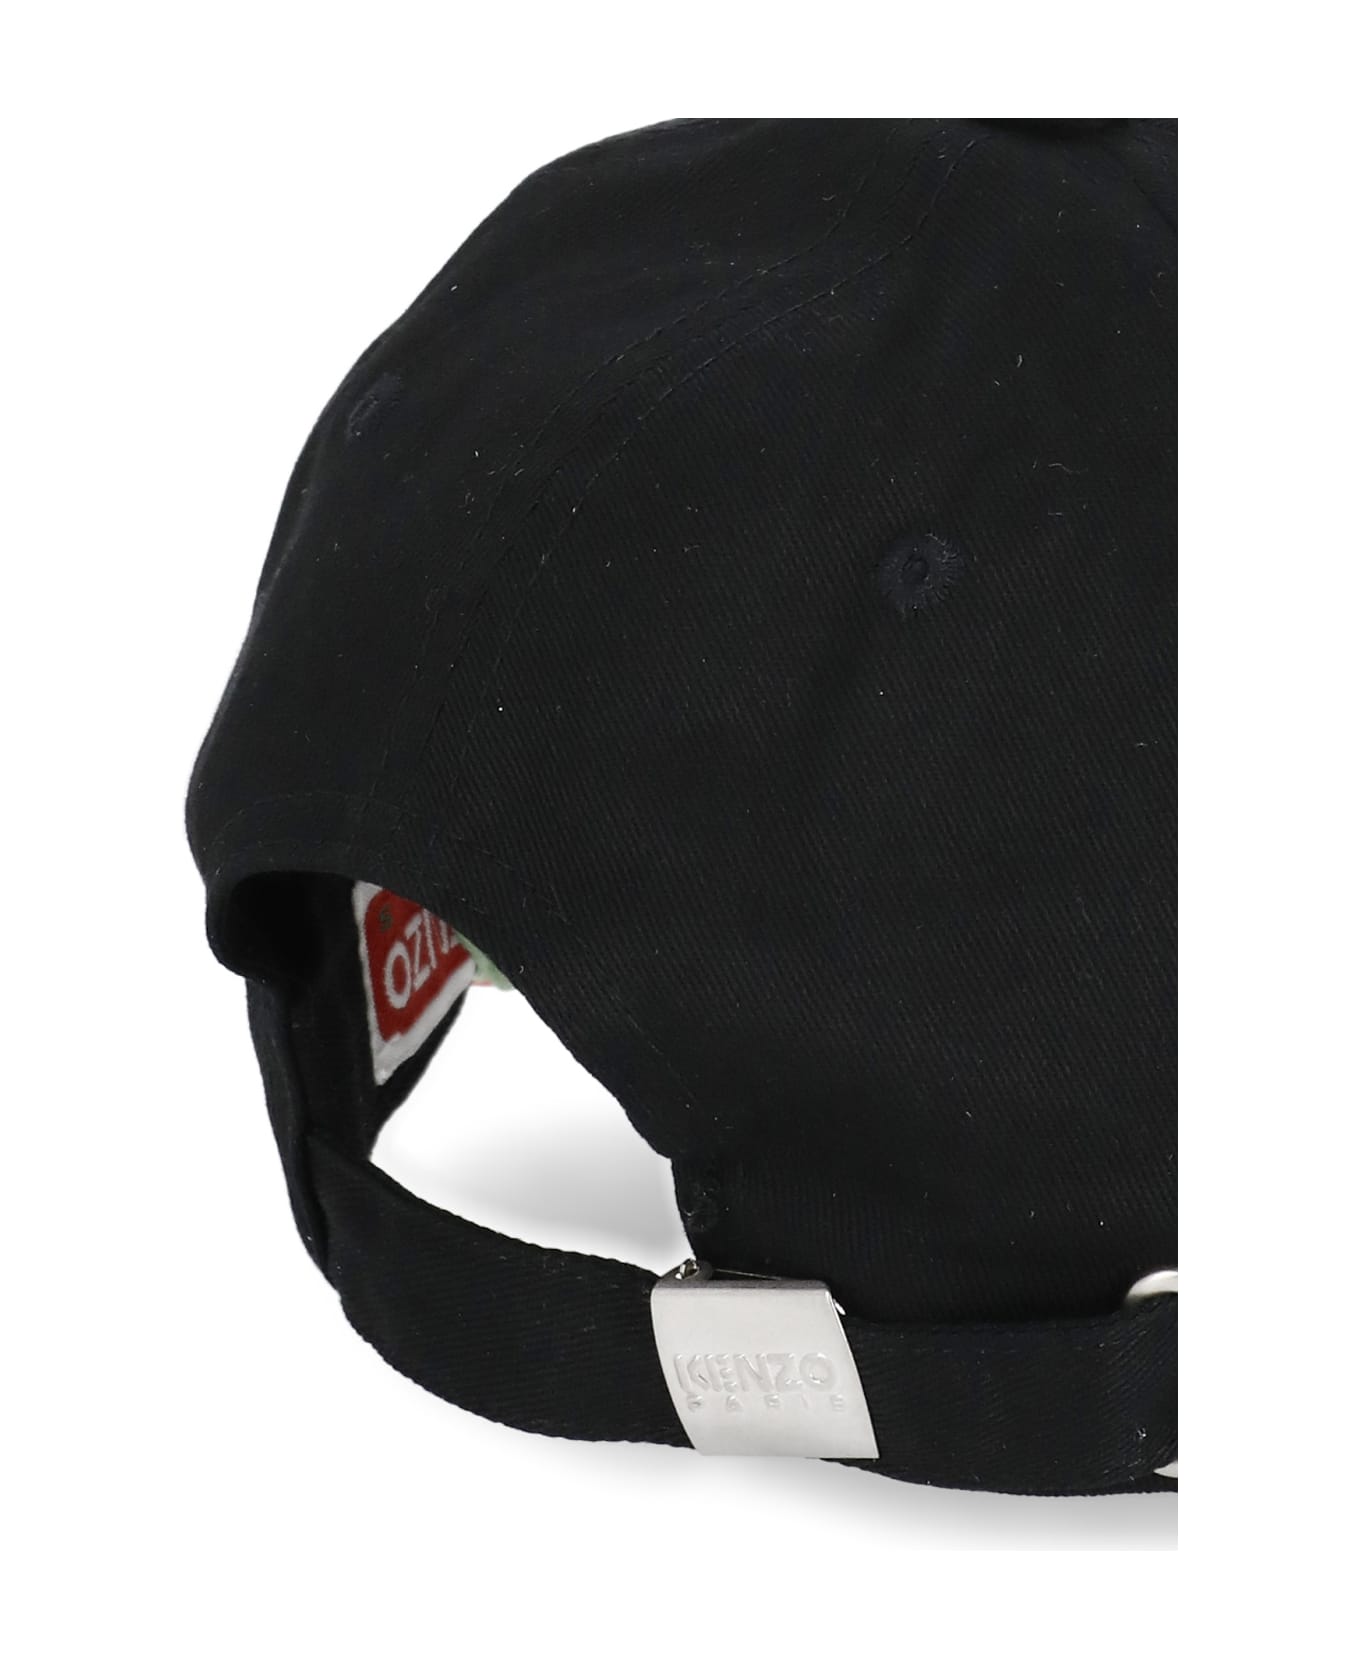 Kenzo Baseball Hat - Black 帽子